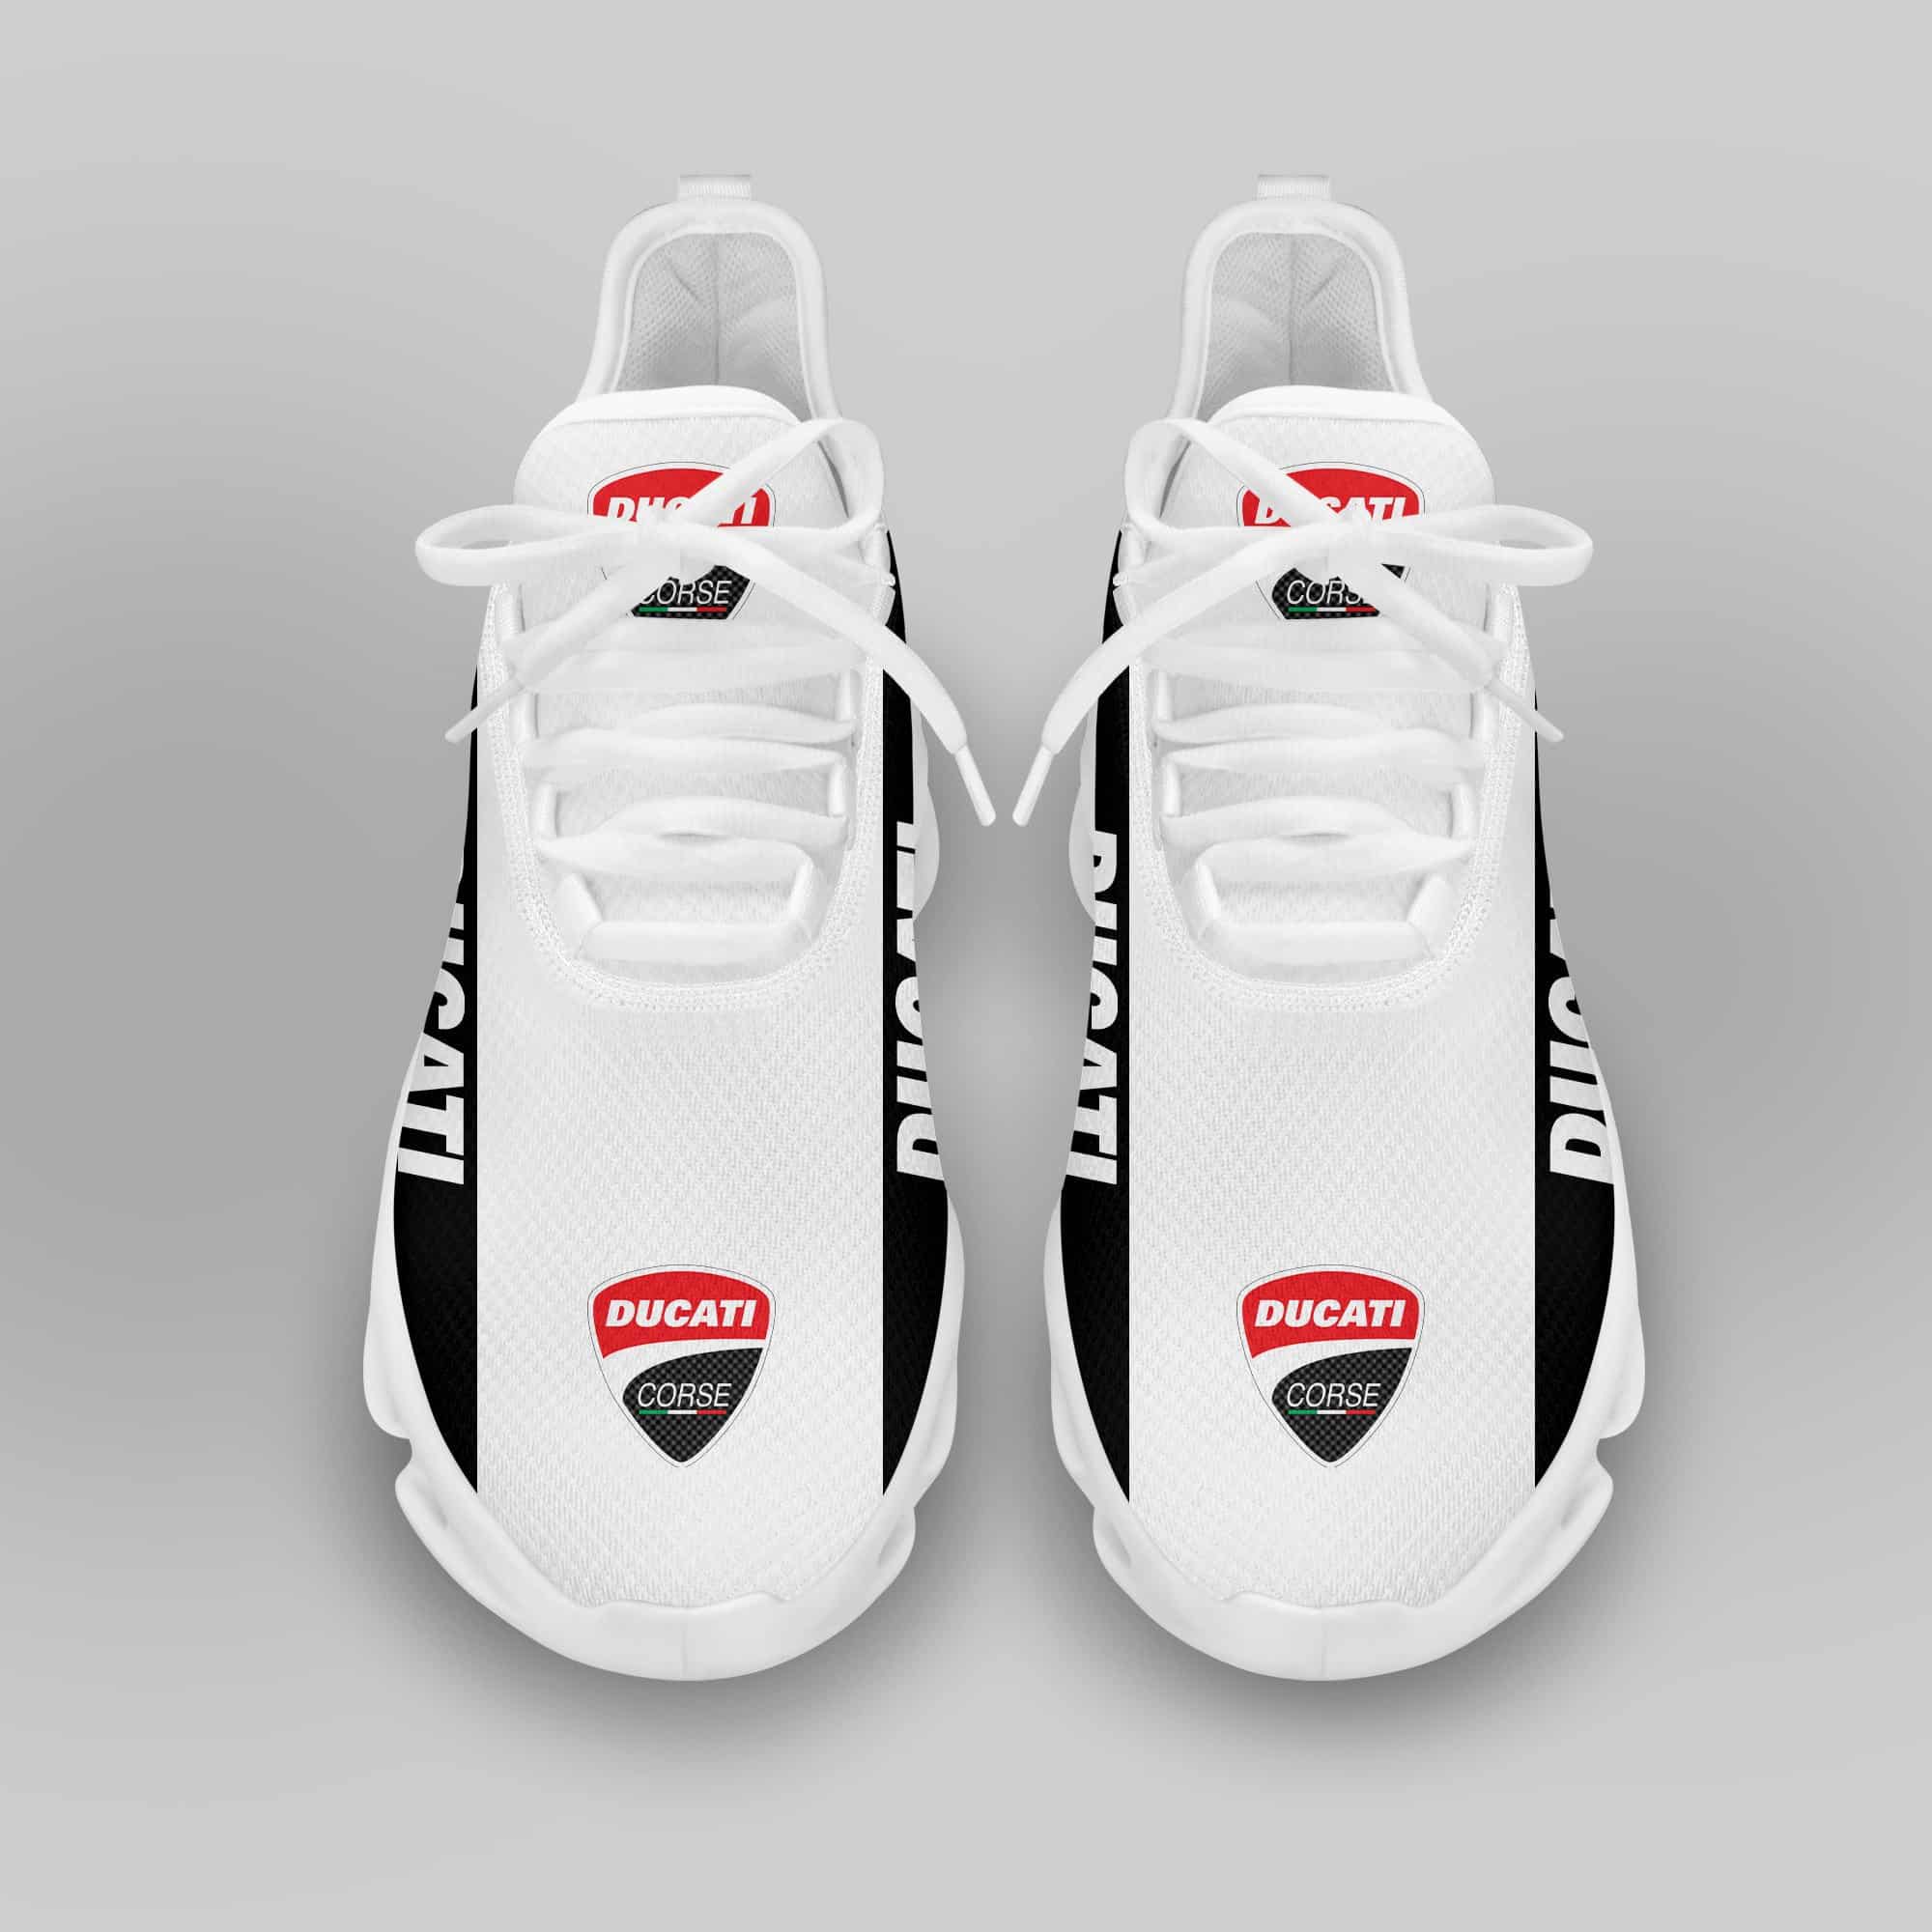 Ducati Racing Running Shoes Max Soul Shoes Sneakers Ver 40 3